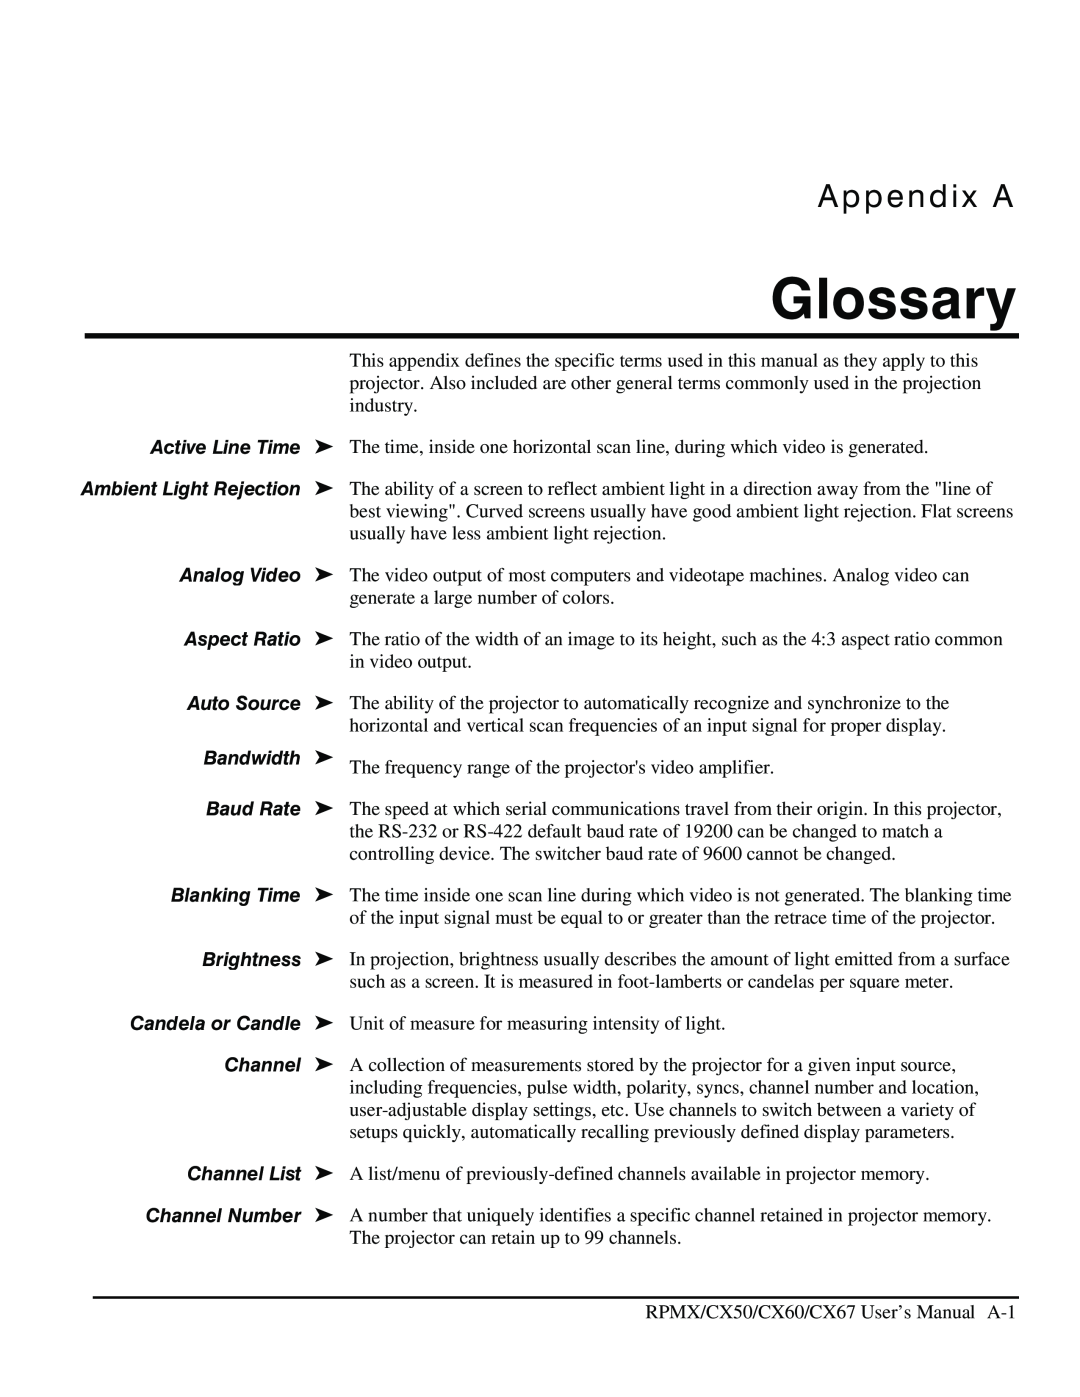 Christie Digital Systems CX60, CX50, CX67 user manual Glossary, Appendix A 